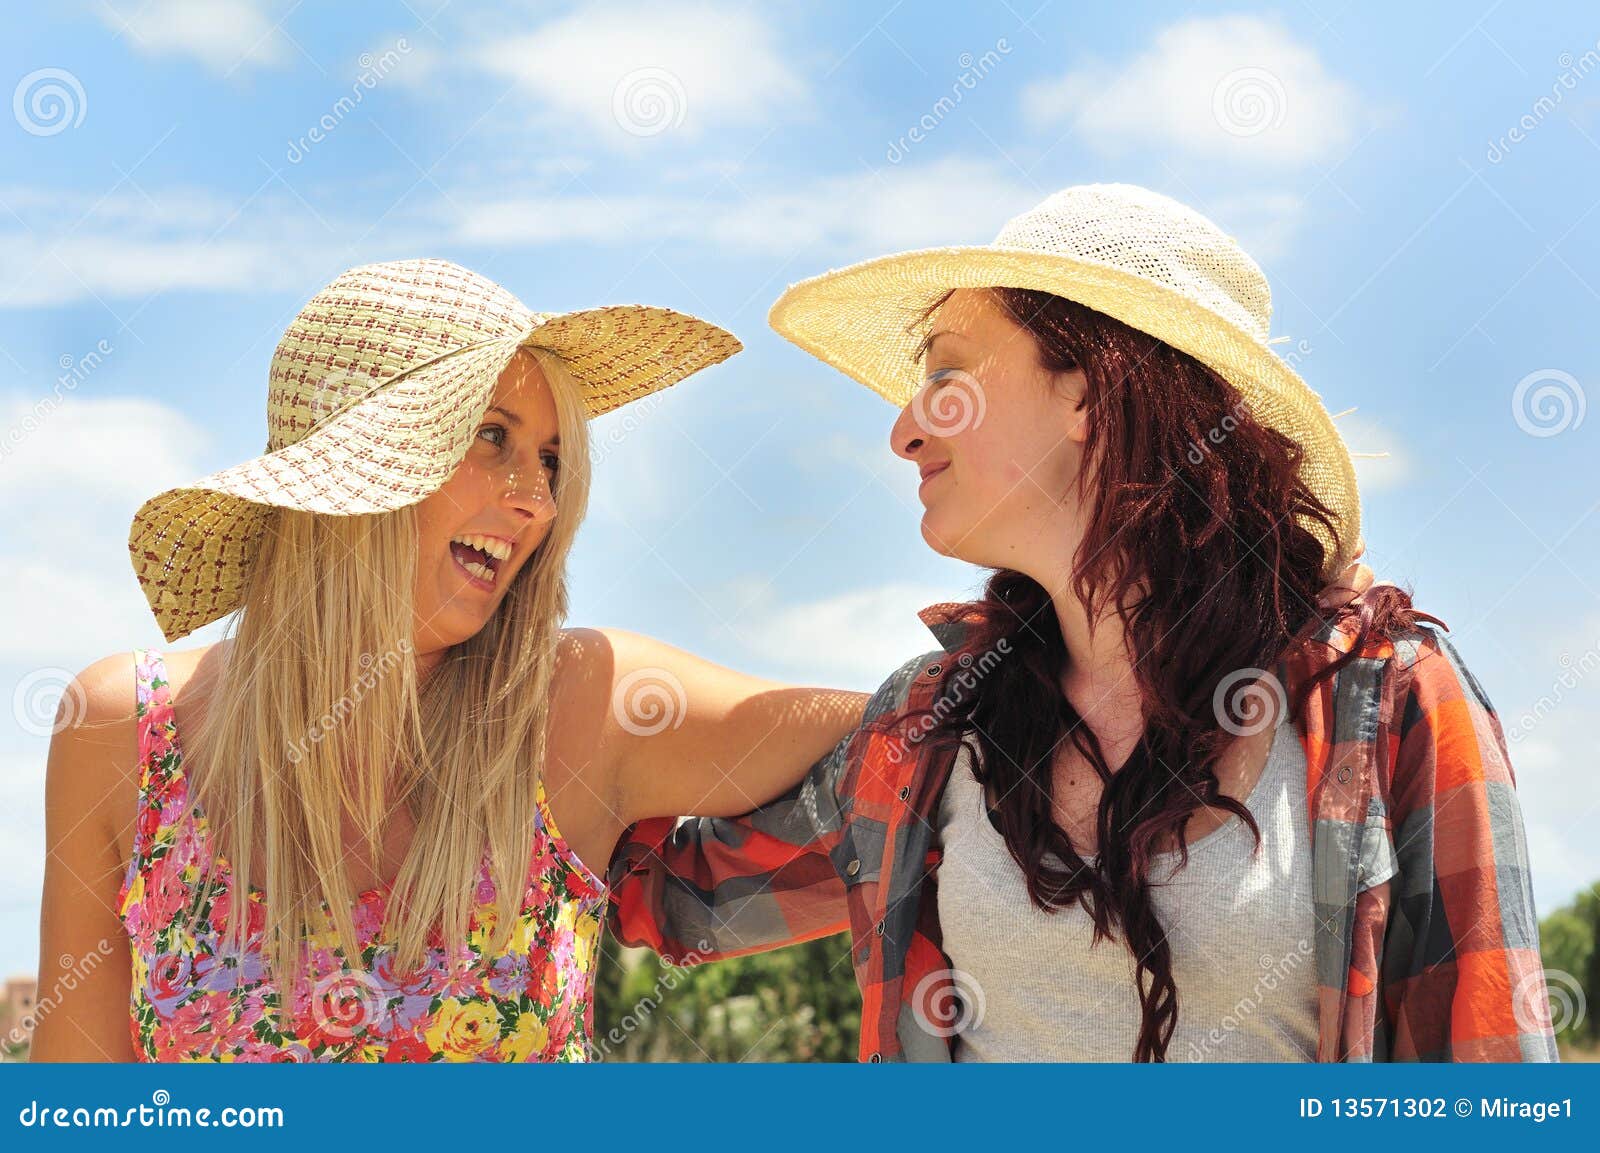 two girls laughing and joking